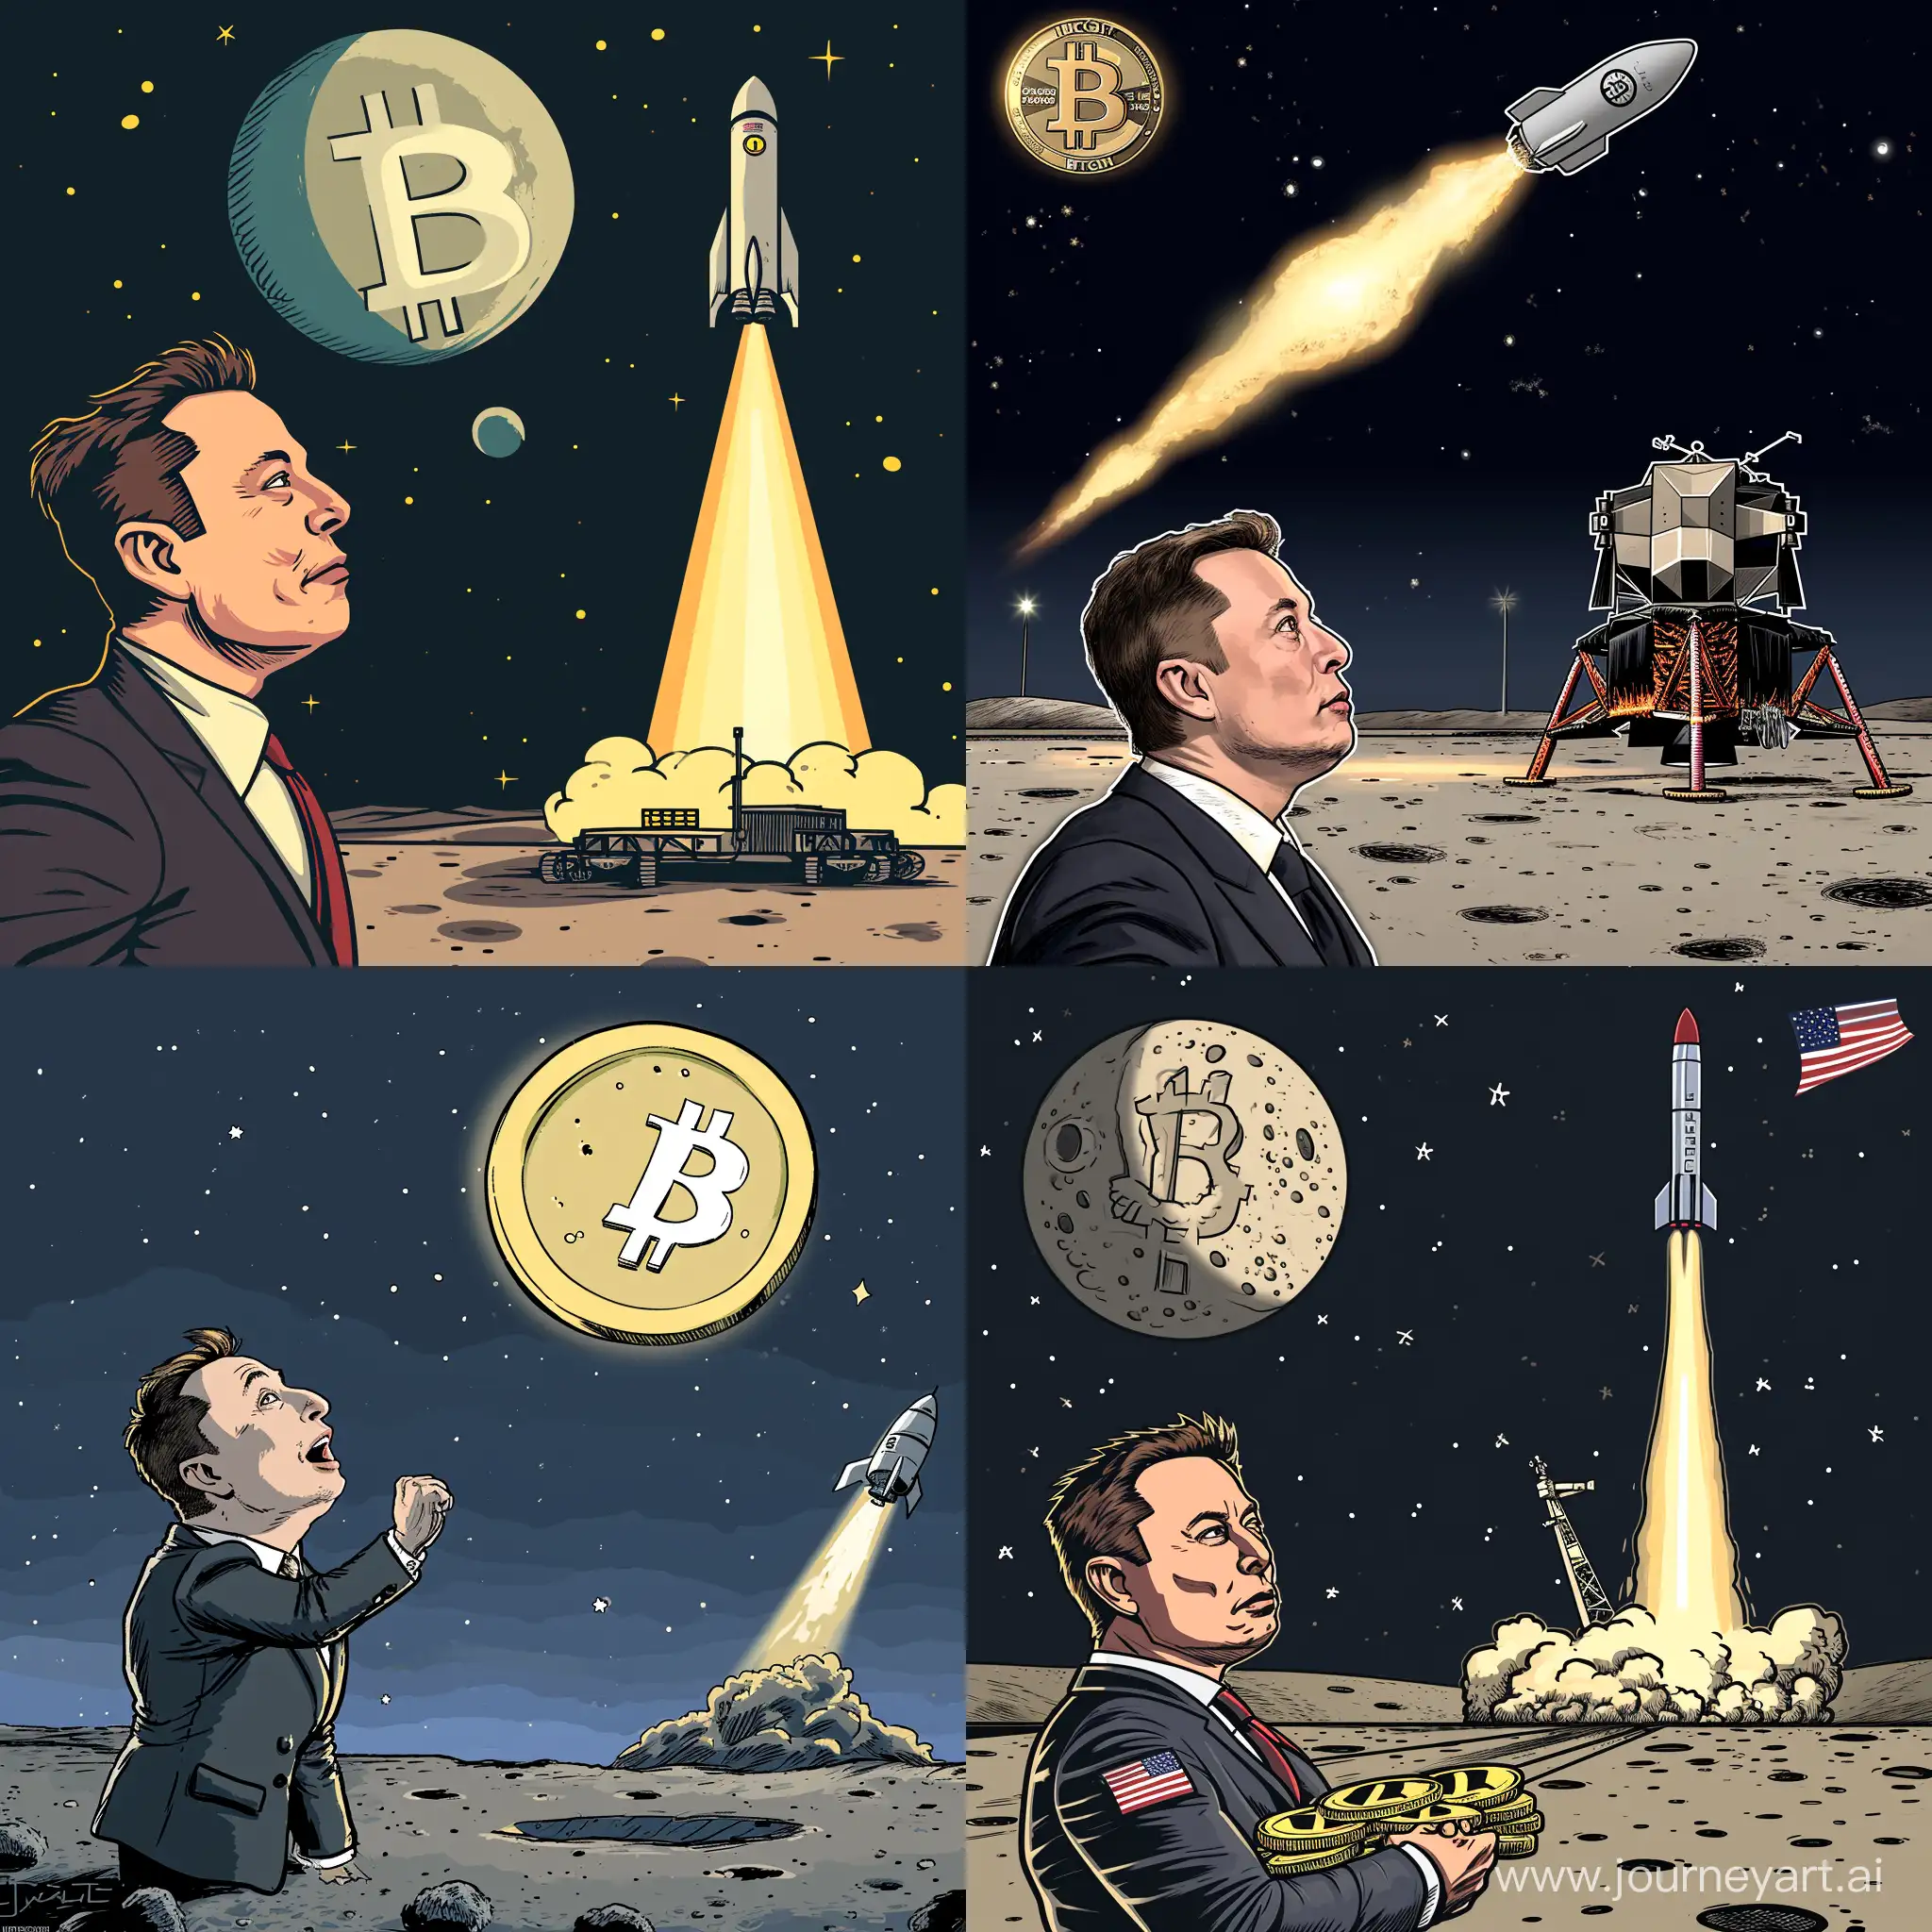 cartoon style, ilon musk launches bitcoin to the moon